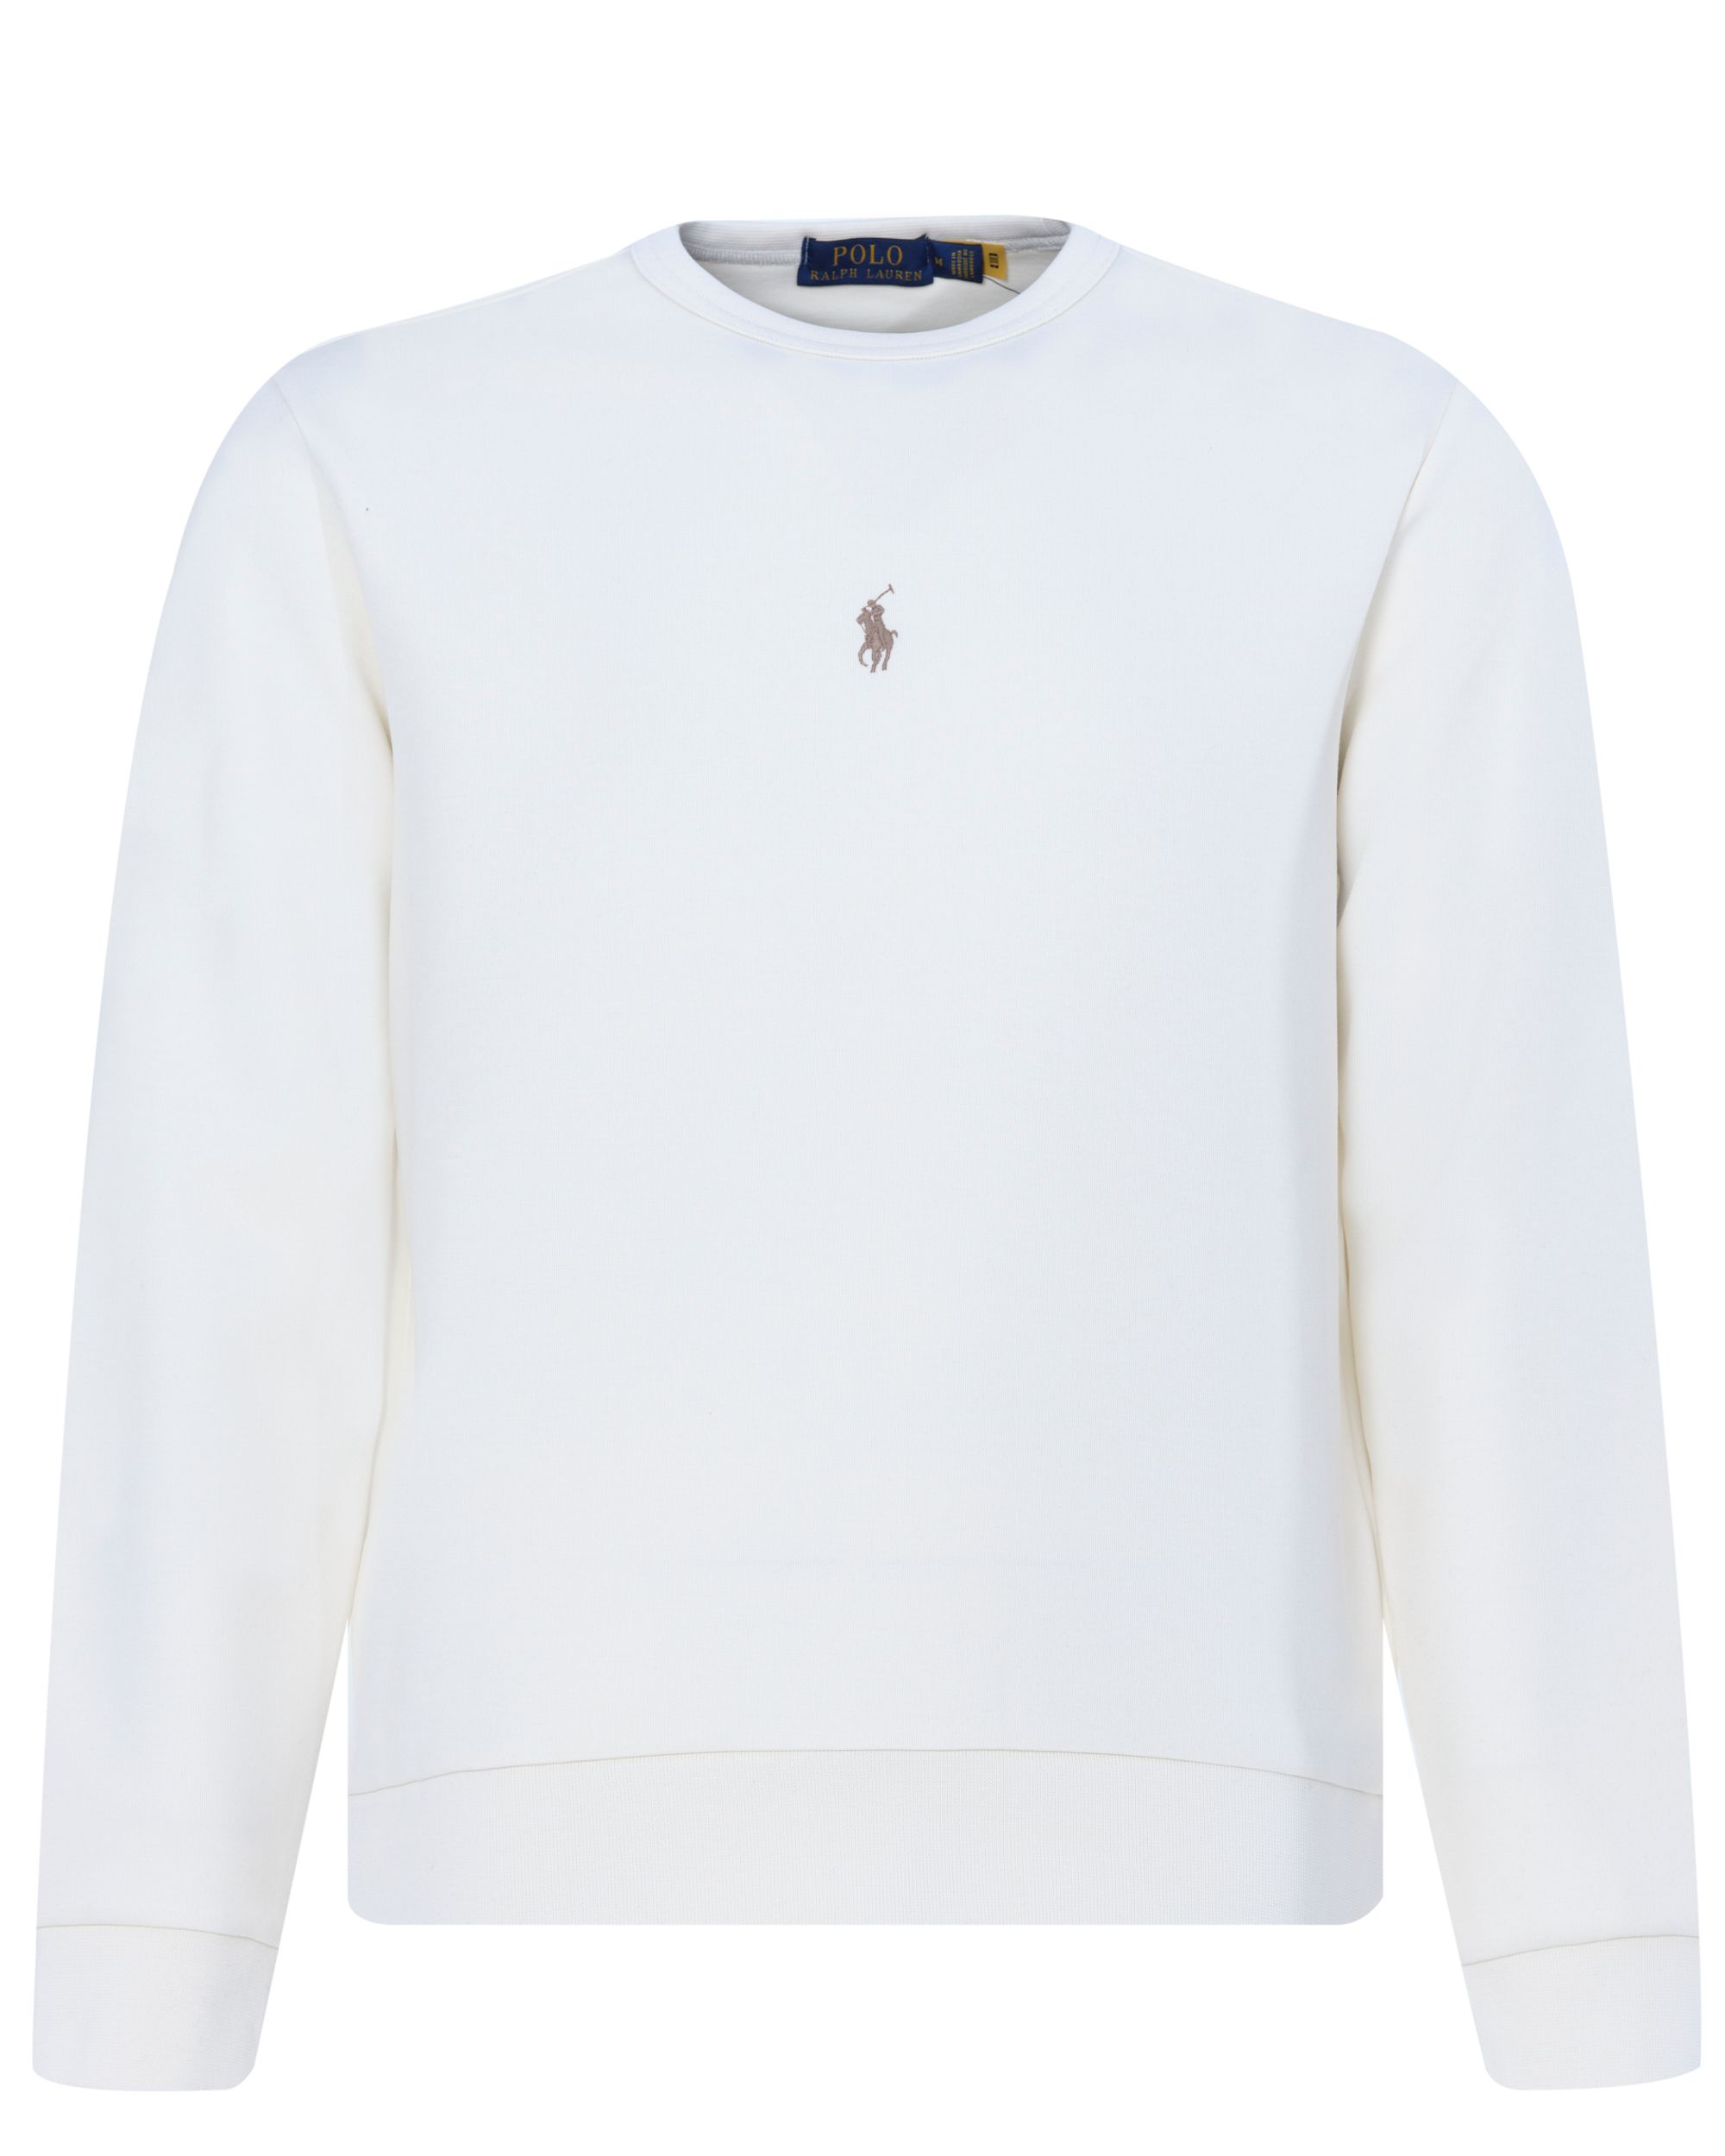 Polo Ralph Lauren - Sweater Ecru 080627-001-L